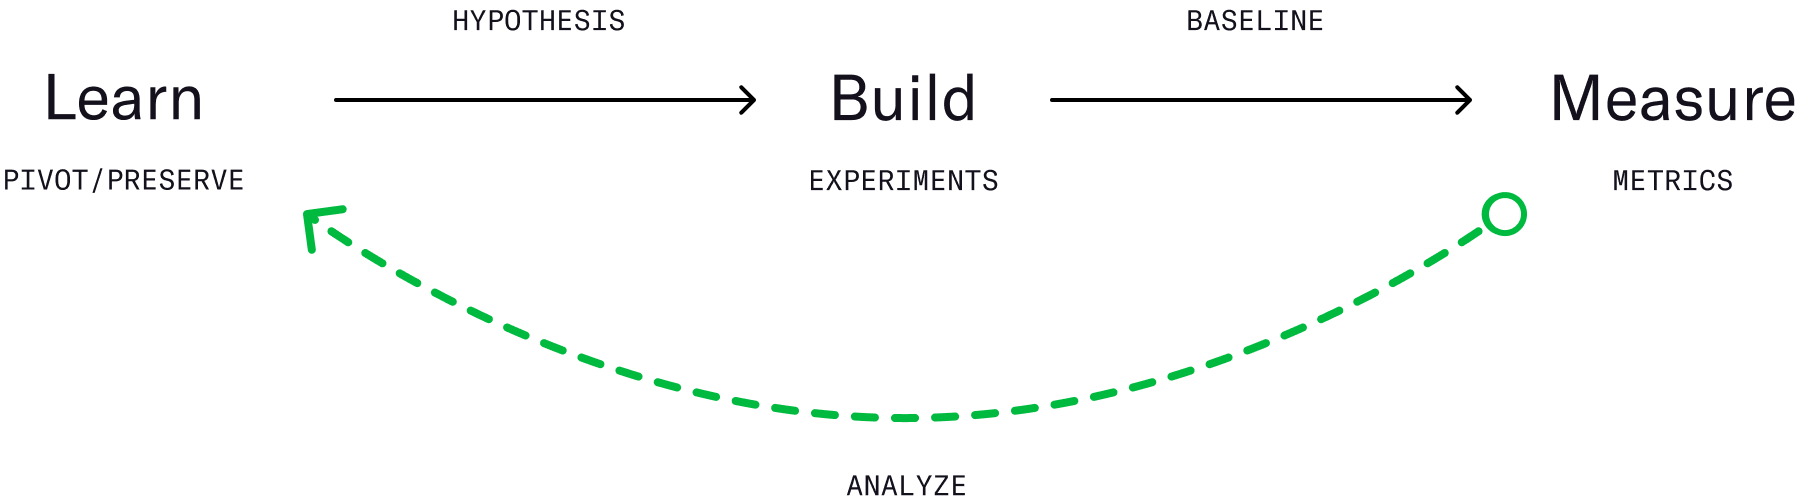 MojoTech's product development feedback loop.